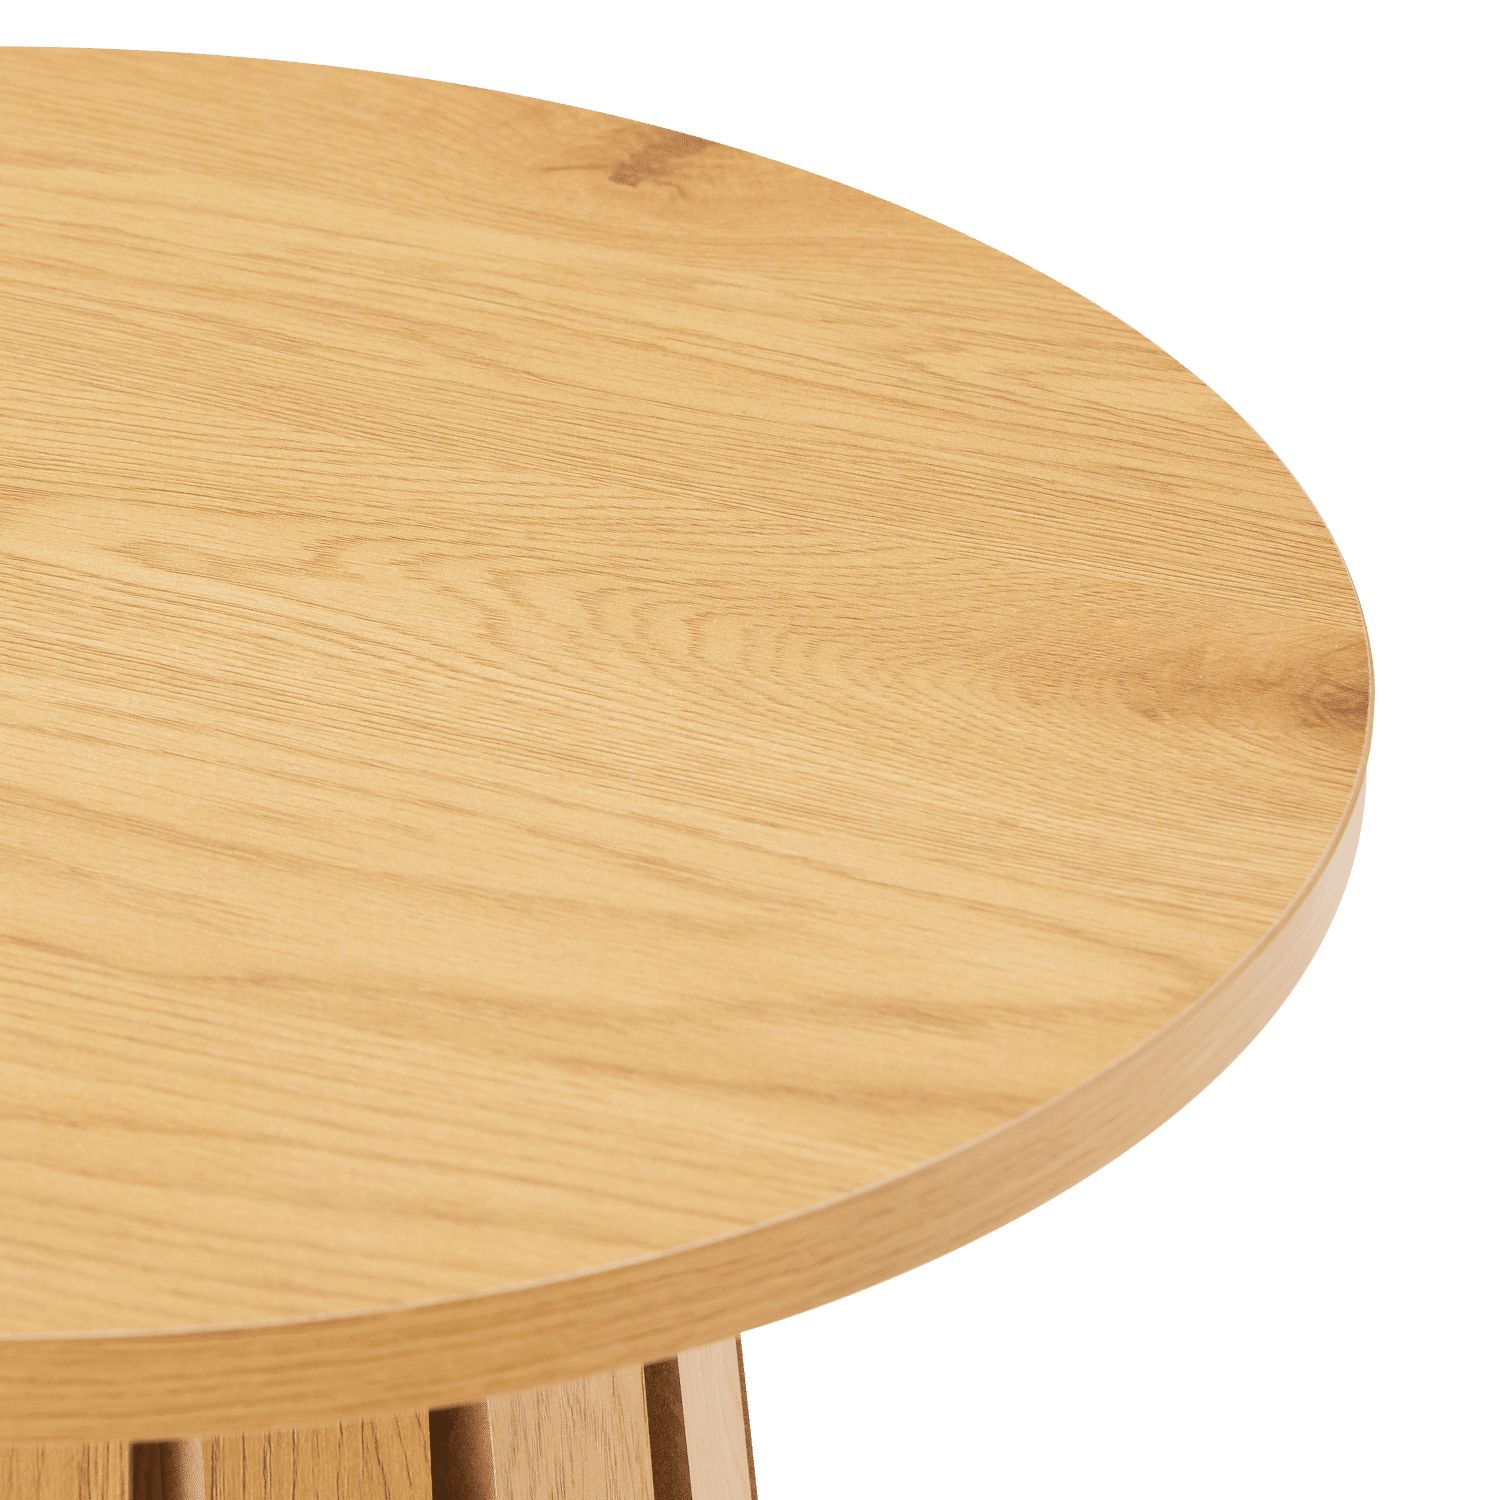 LIV Tavolino rotondo in stile scandinavo